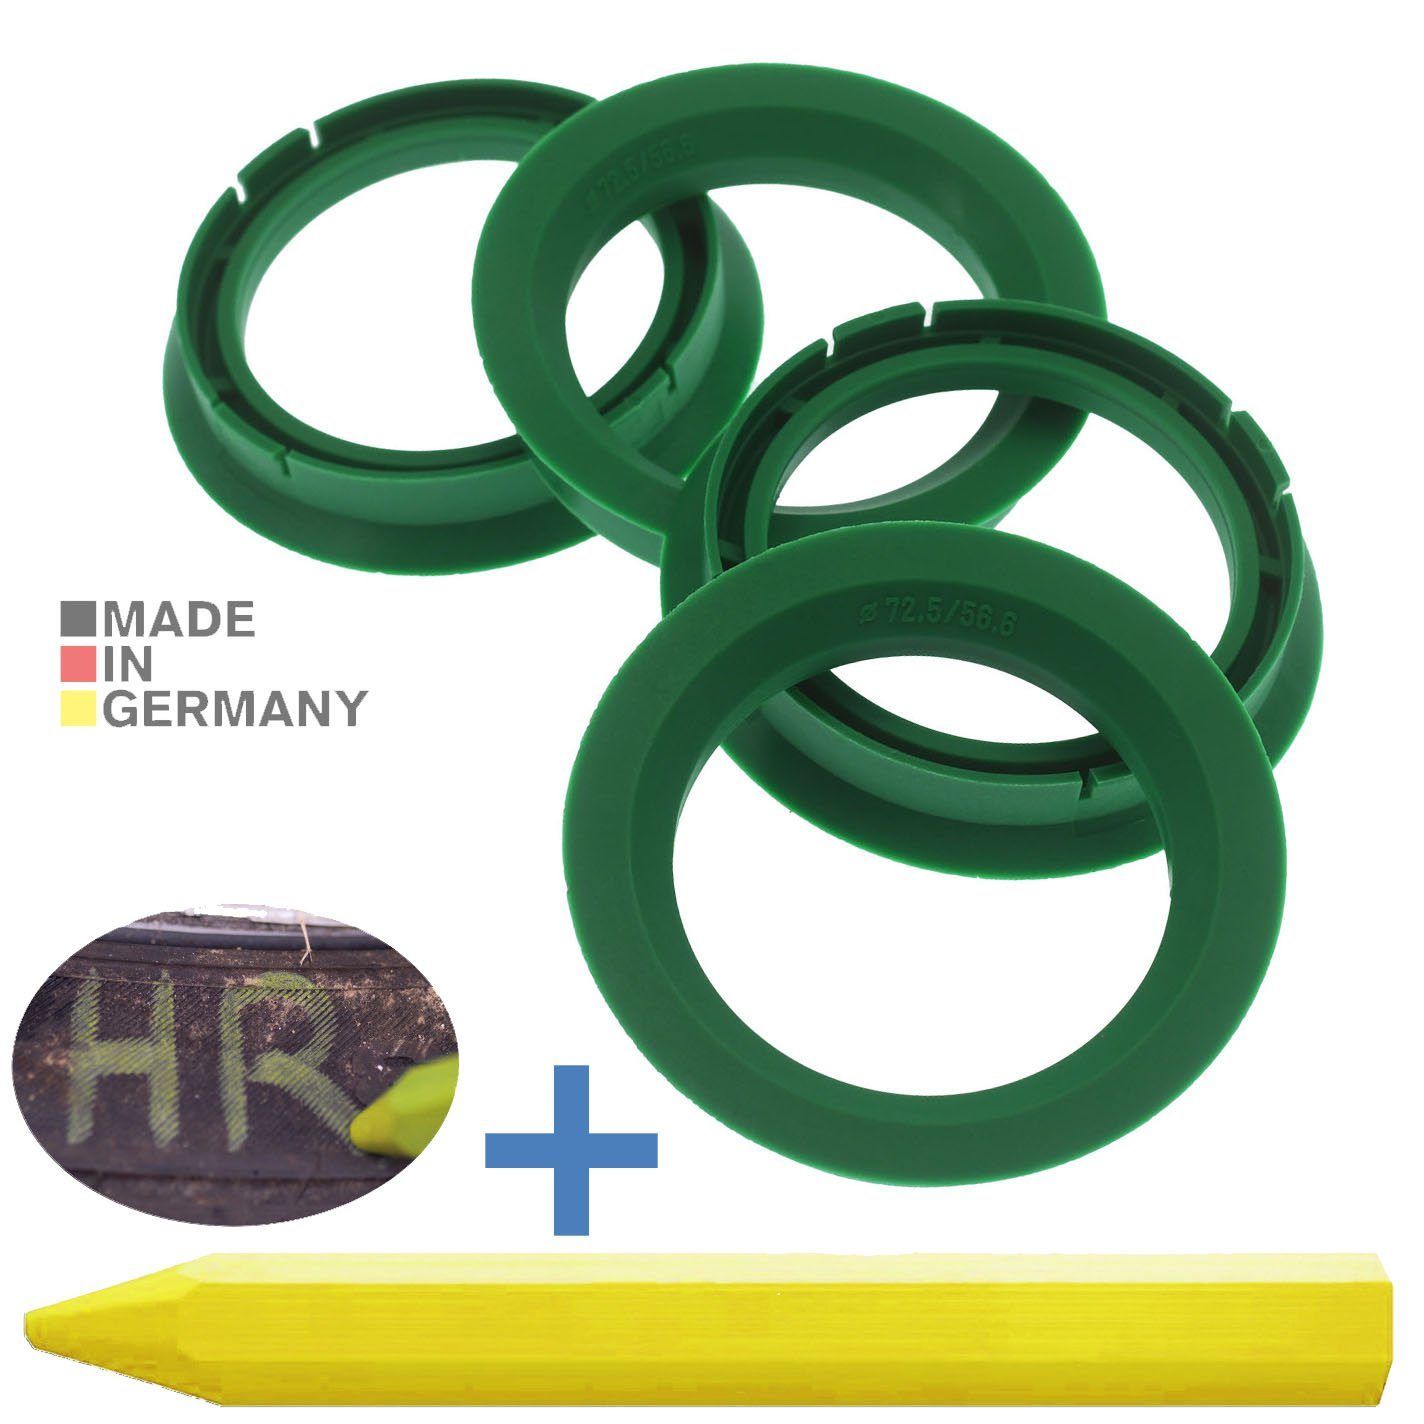 RKC Reifenstift 4X Zentrierringe Grün Felgen Ringe + 1x Reifen Kreide Fett  Stift, Maße: 72,5 x 56,6 mm